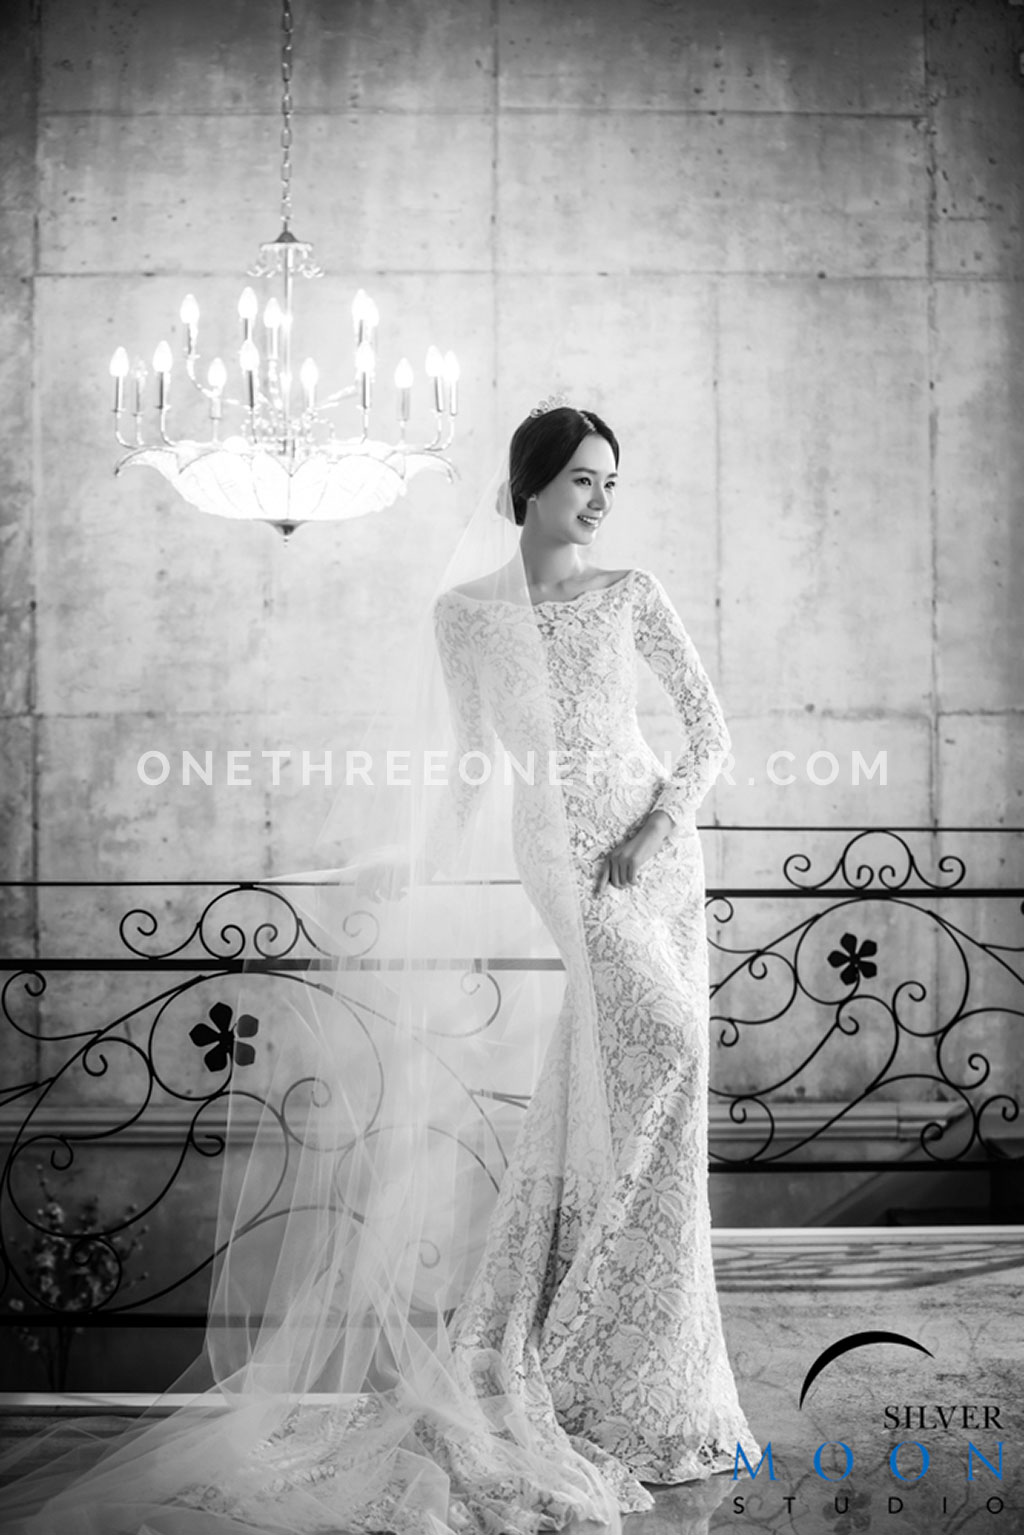 Korean Studio Pre-Wedding Photography: Elegance by Silver Moon Studio on OneThreeOneFour 19